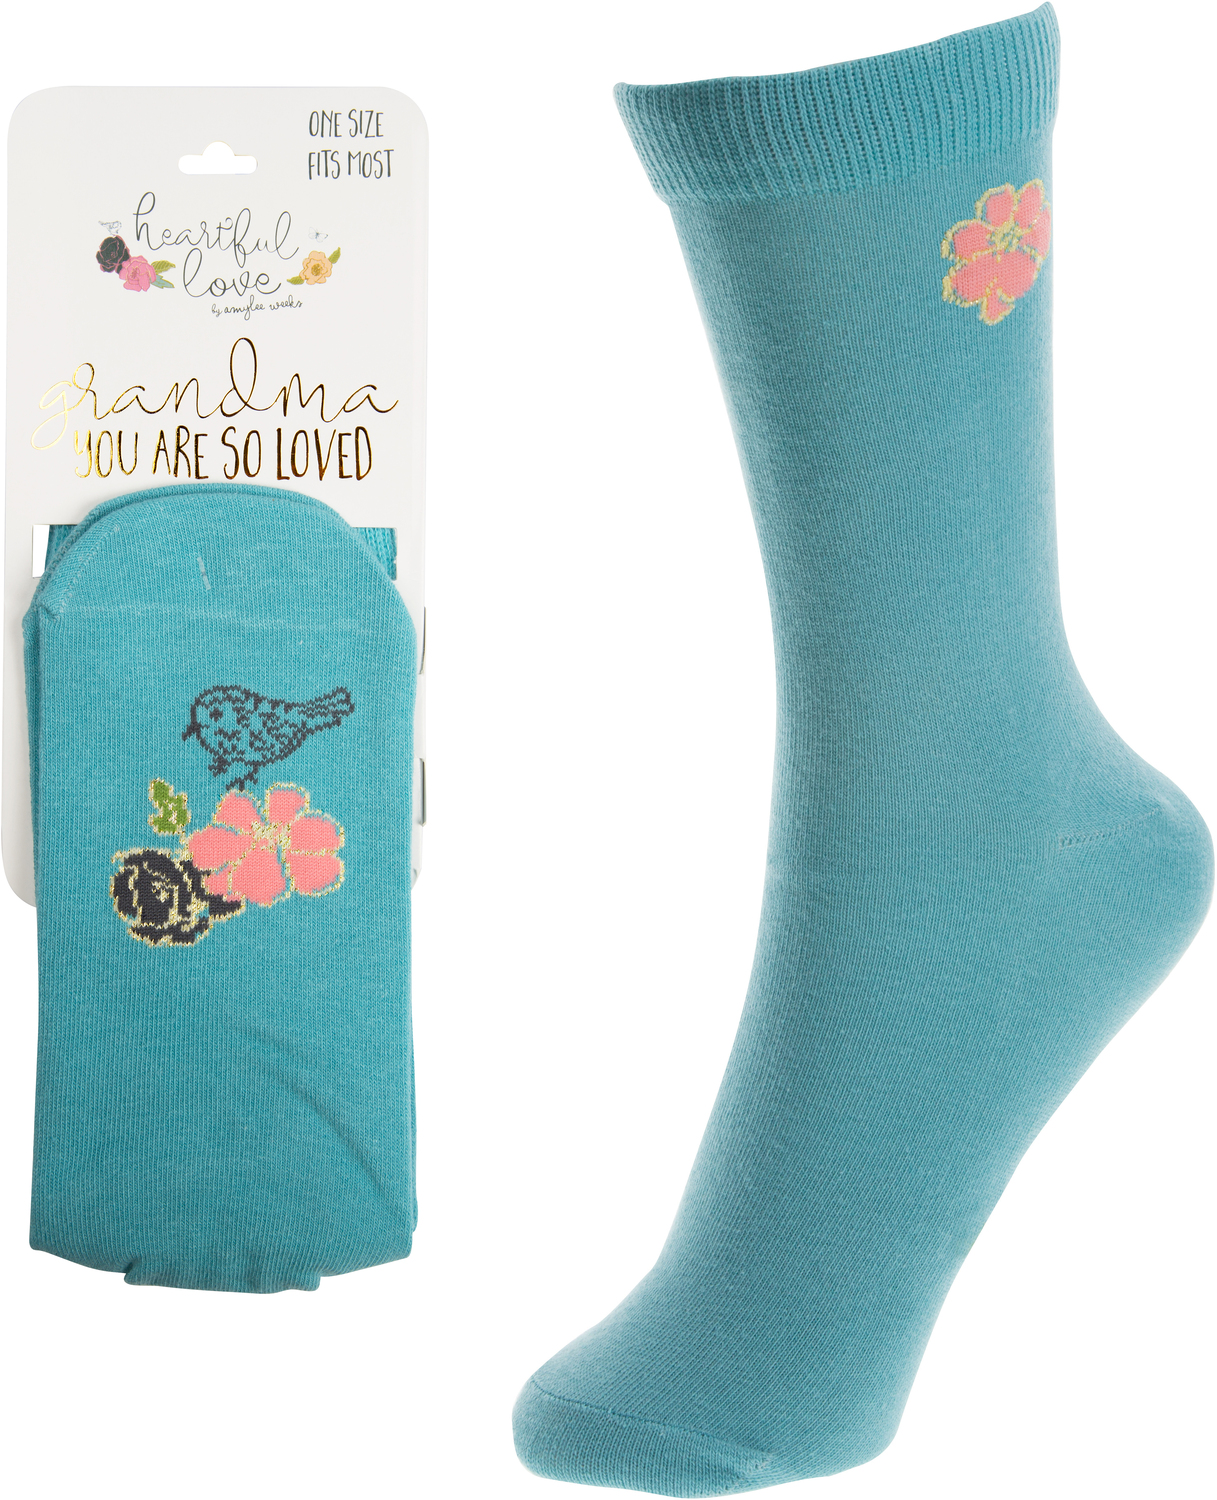 Grandma  by Heartful Love - Grandma  - Ladies Cotton Blend Sock